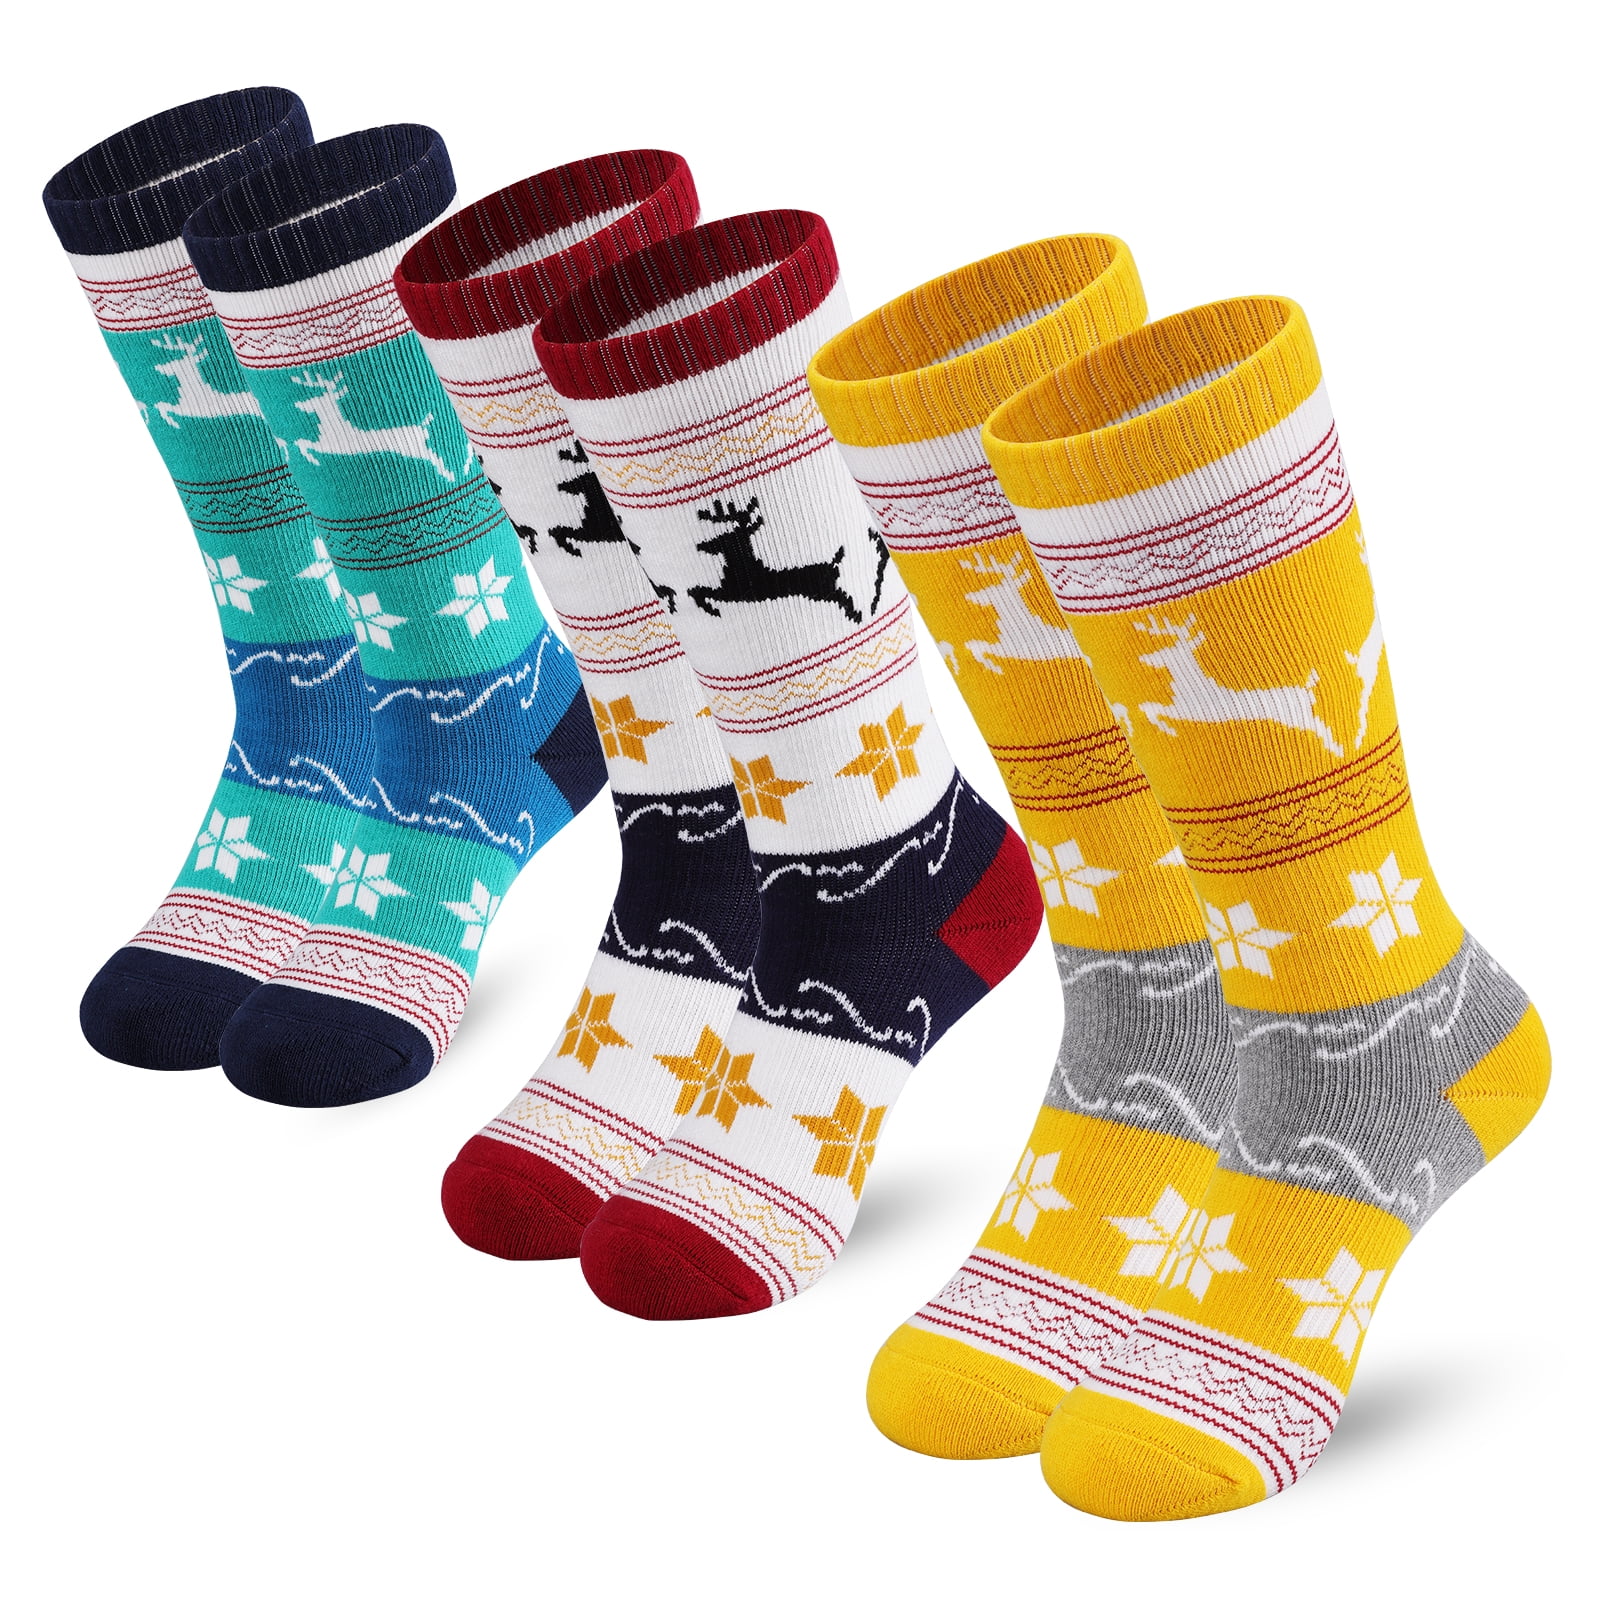 2 Pairs Merino Wool Ski Socks Full Terry for Toddler Kids Boy Girl Winter Warm Thermal Snow Socks 